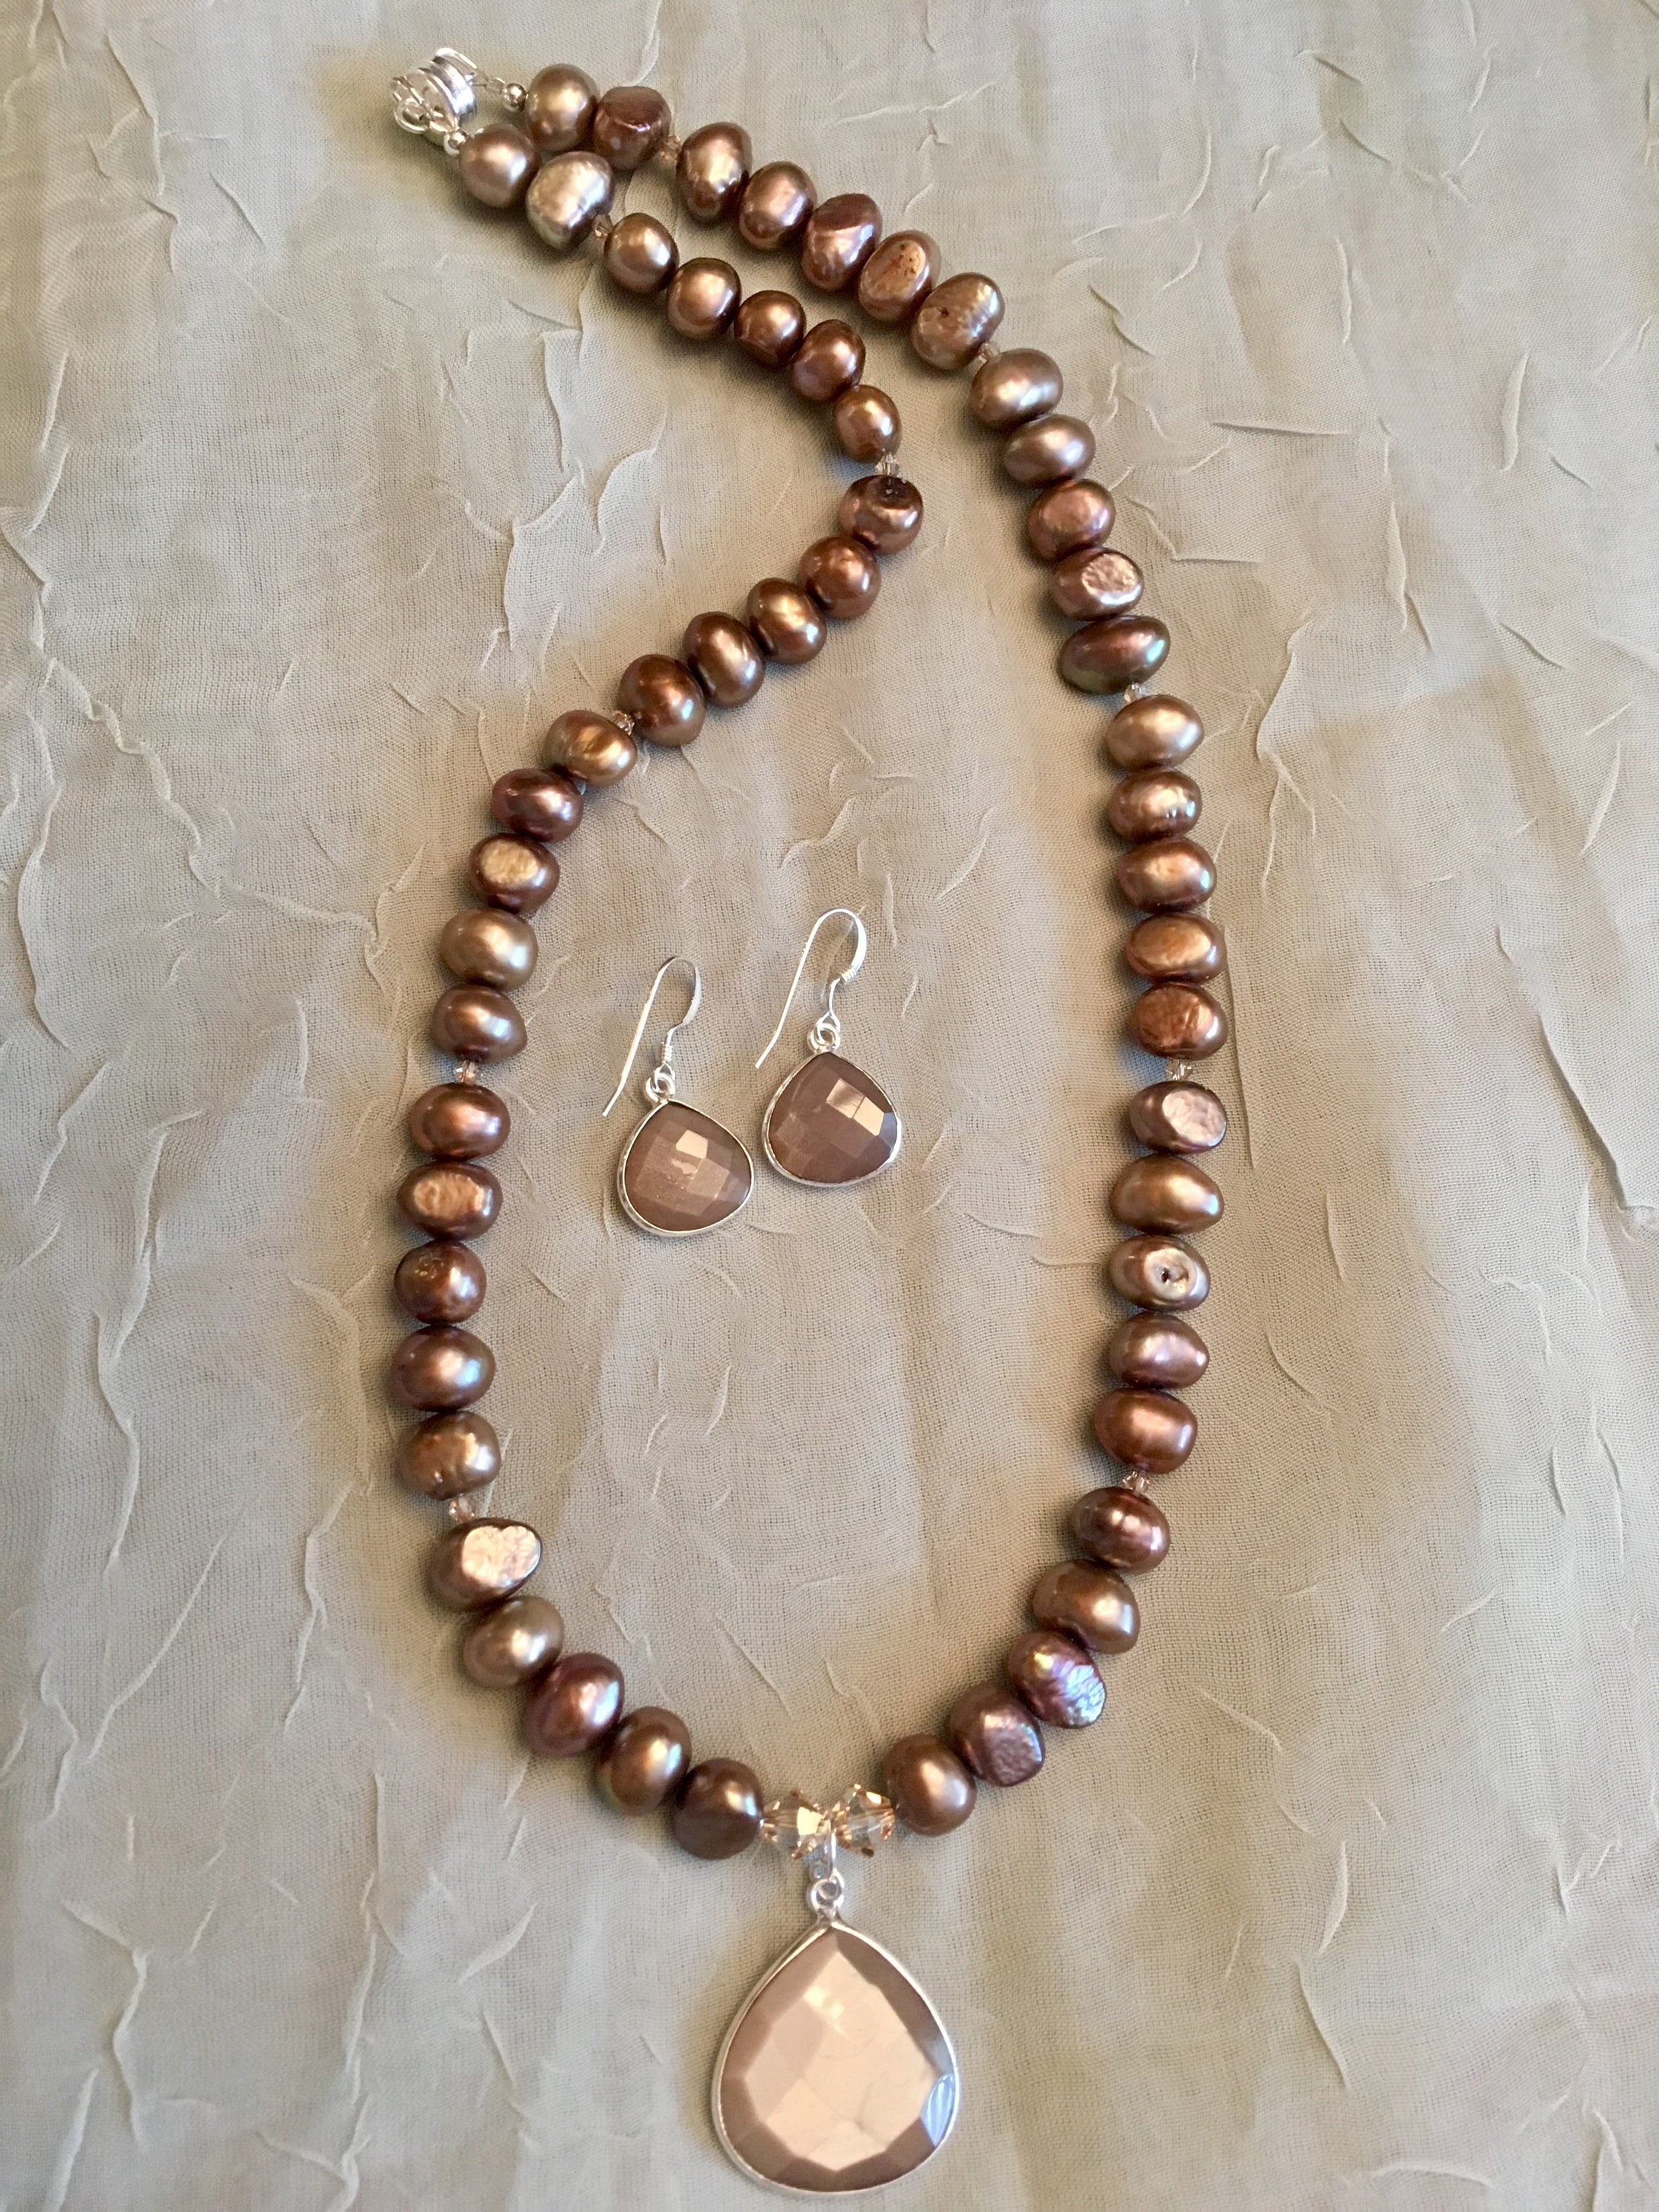 Ringed Freshwater Pearls, Swarovski Crystals & Chocolate Moonstone Pendant.  18